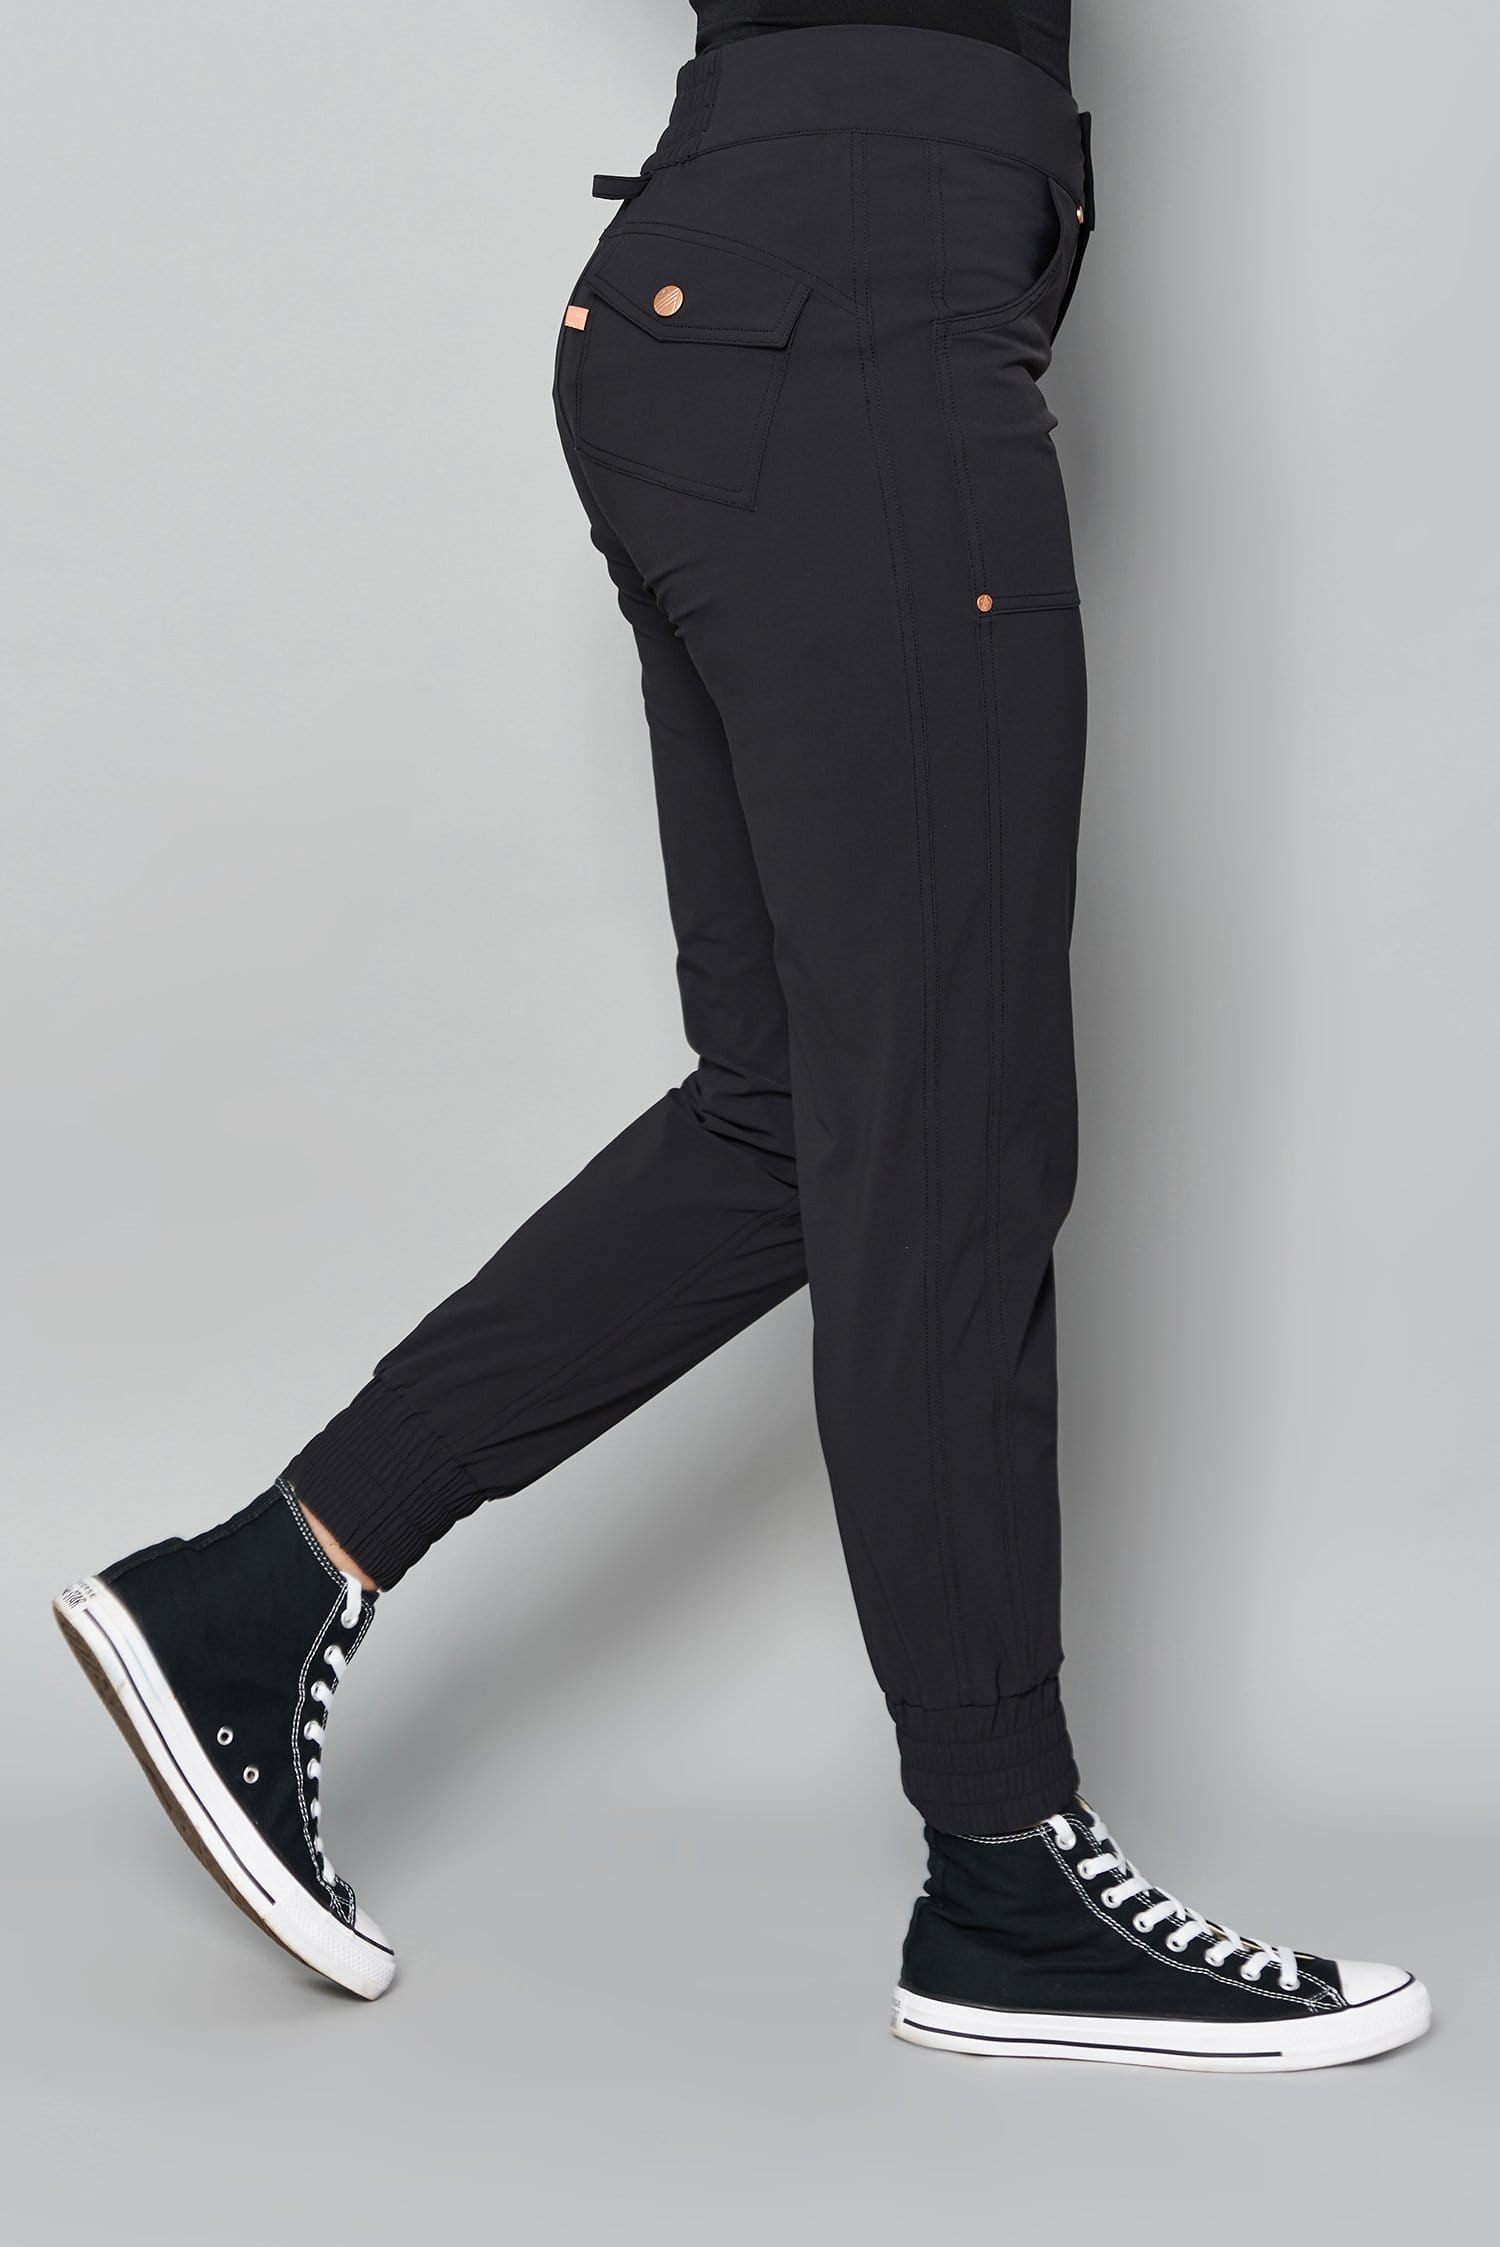 Casual Stroll Pants - Black - 24r / Uk6 - Womens - Acai Outdoorwear